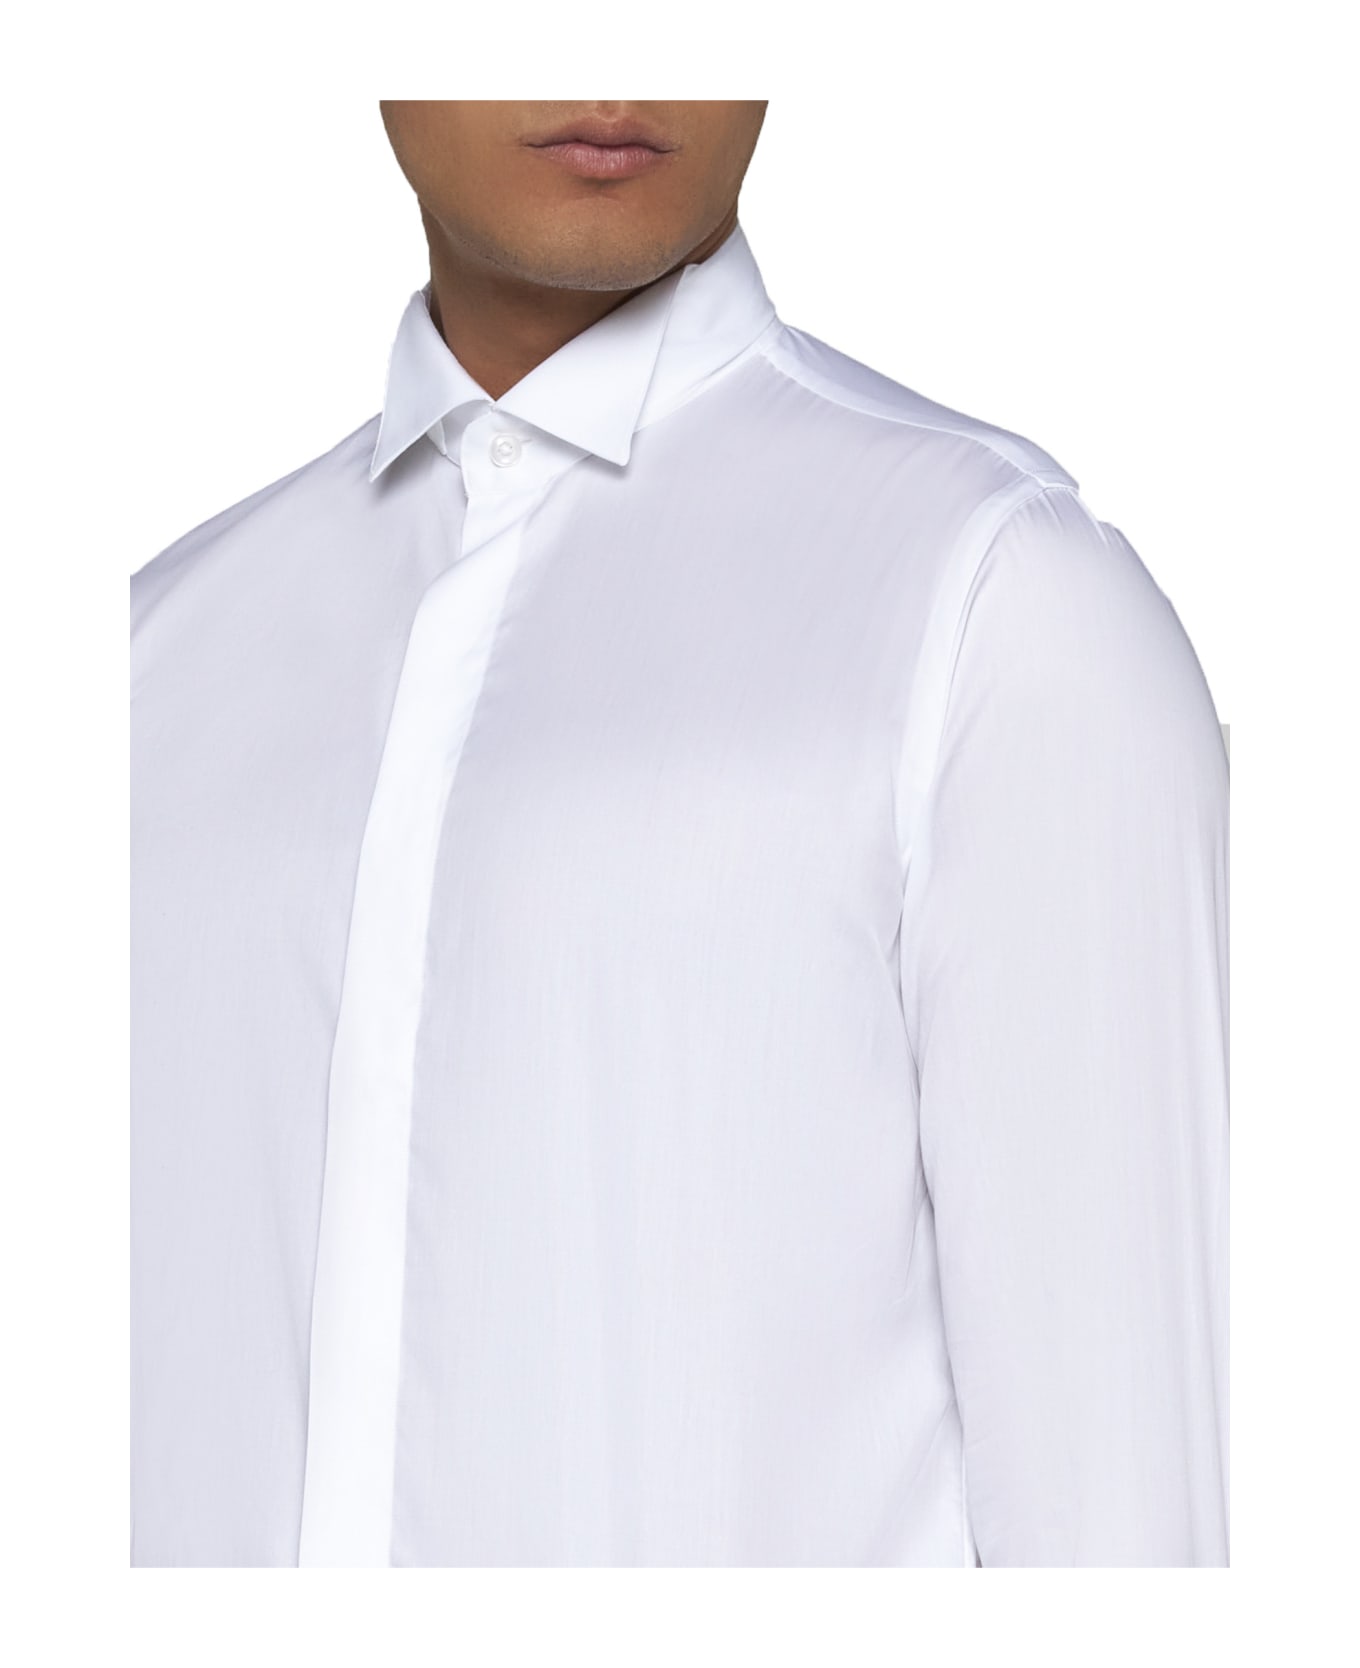 Tagliatore Shirt - White シャツ